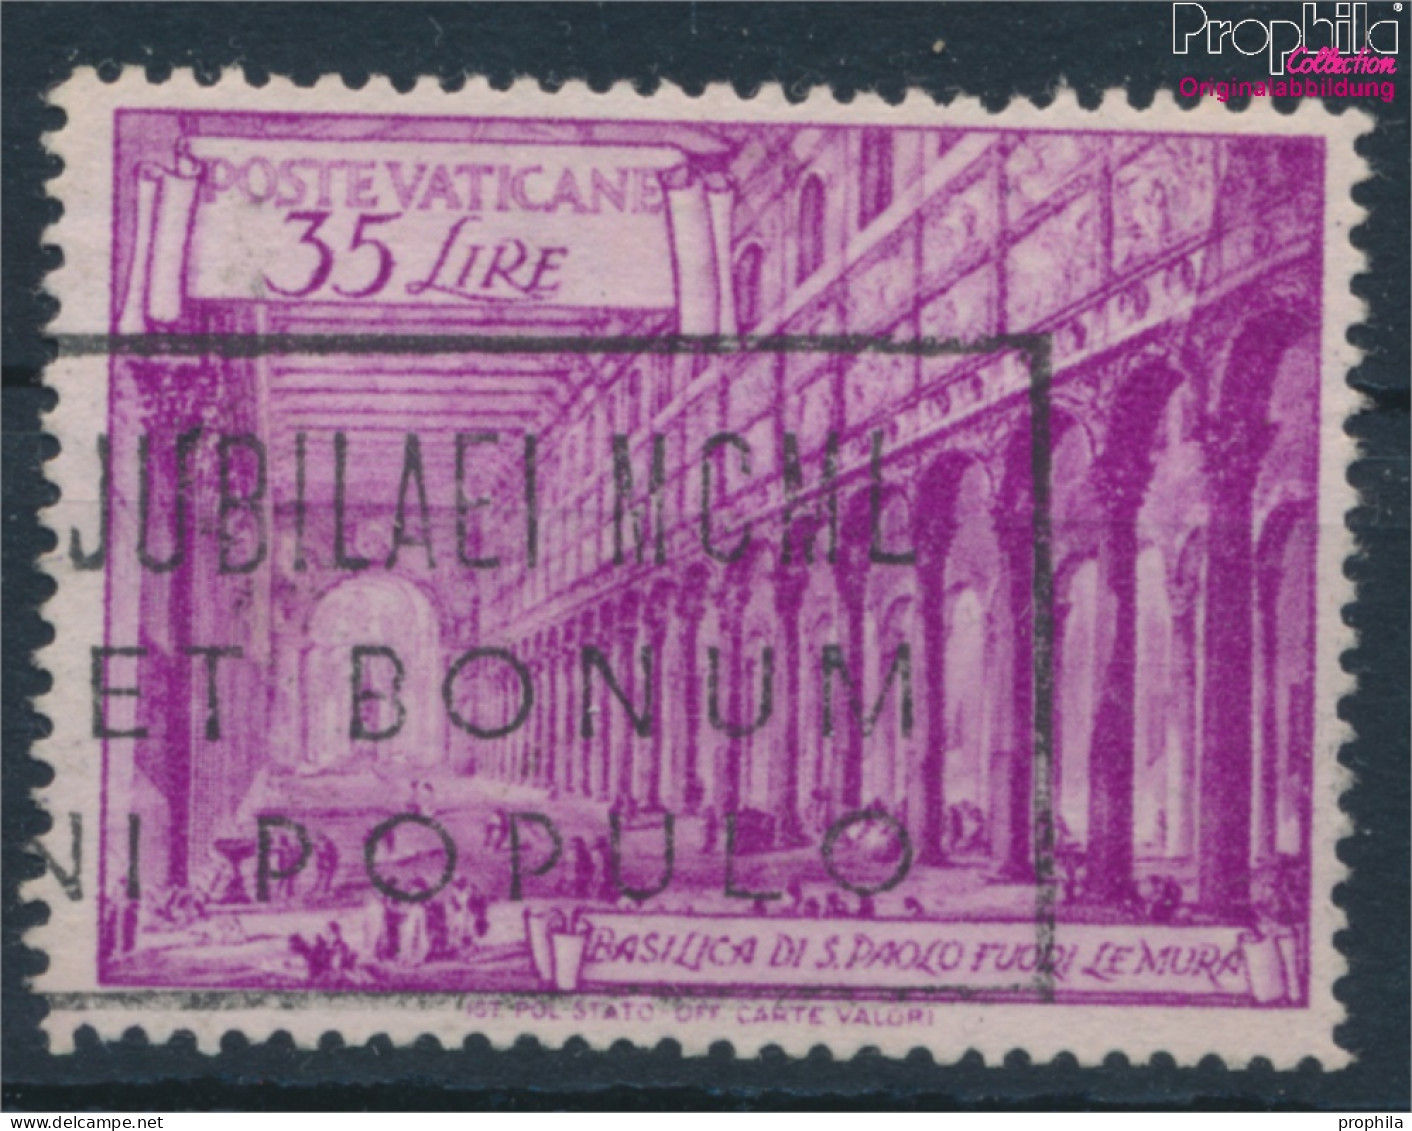 Vatikanstadt 156C Gestempelt 1949 Basiliken (10406028 - Usati